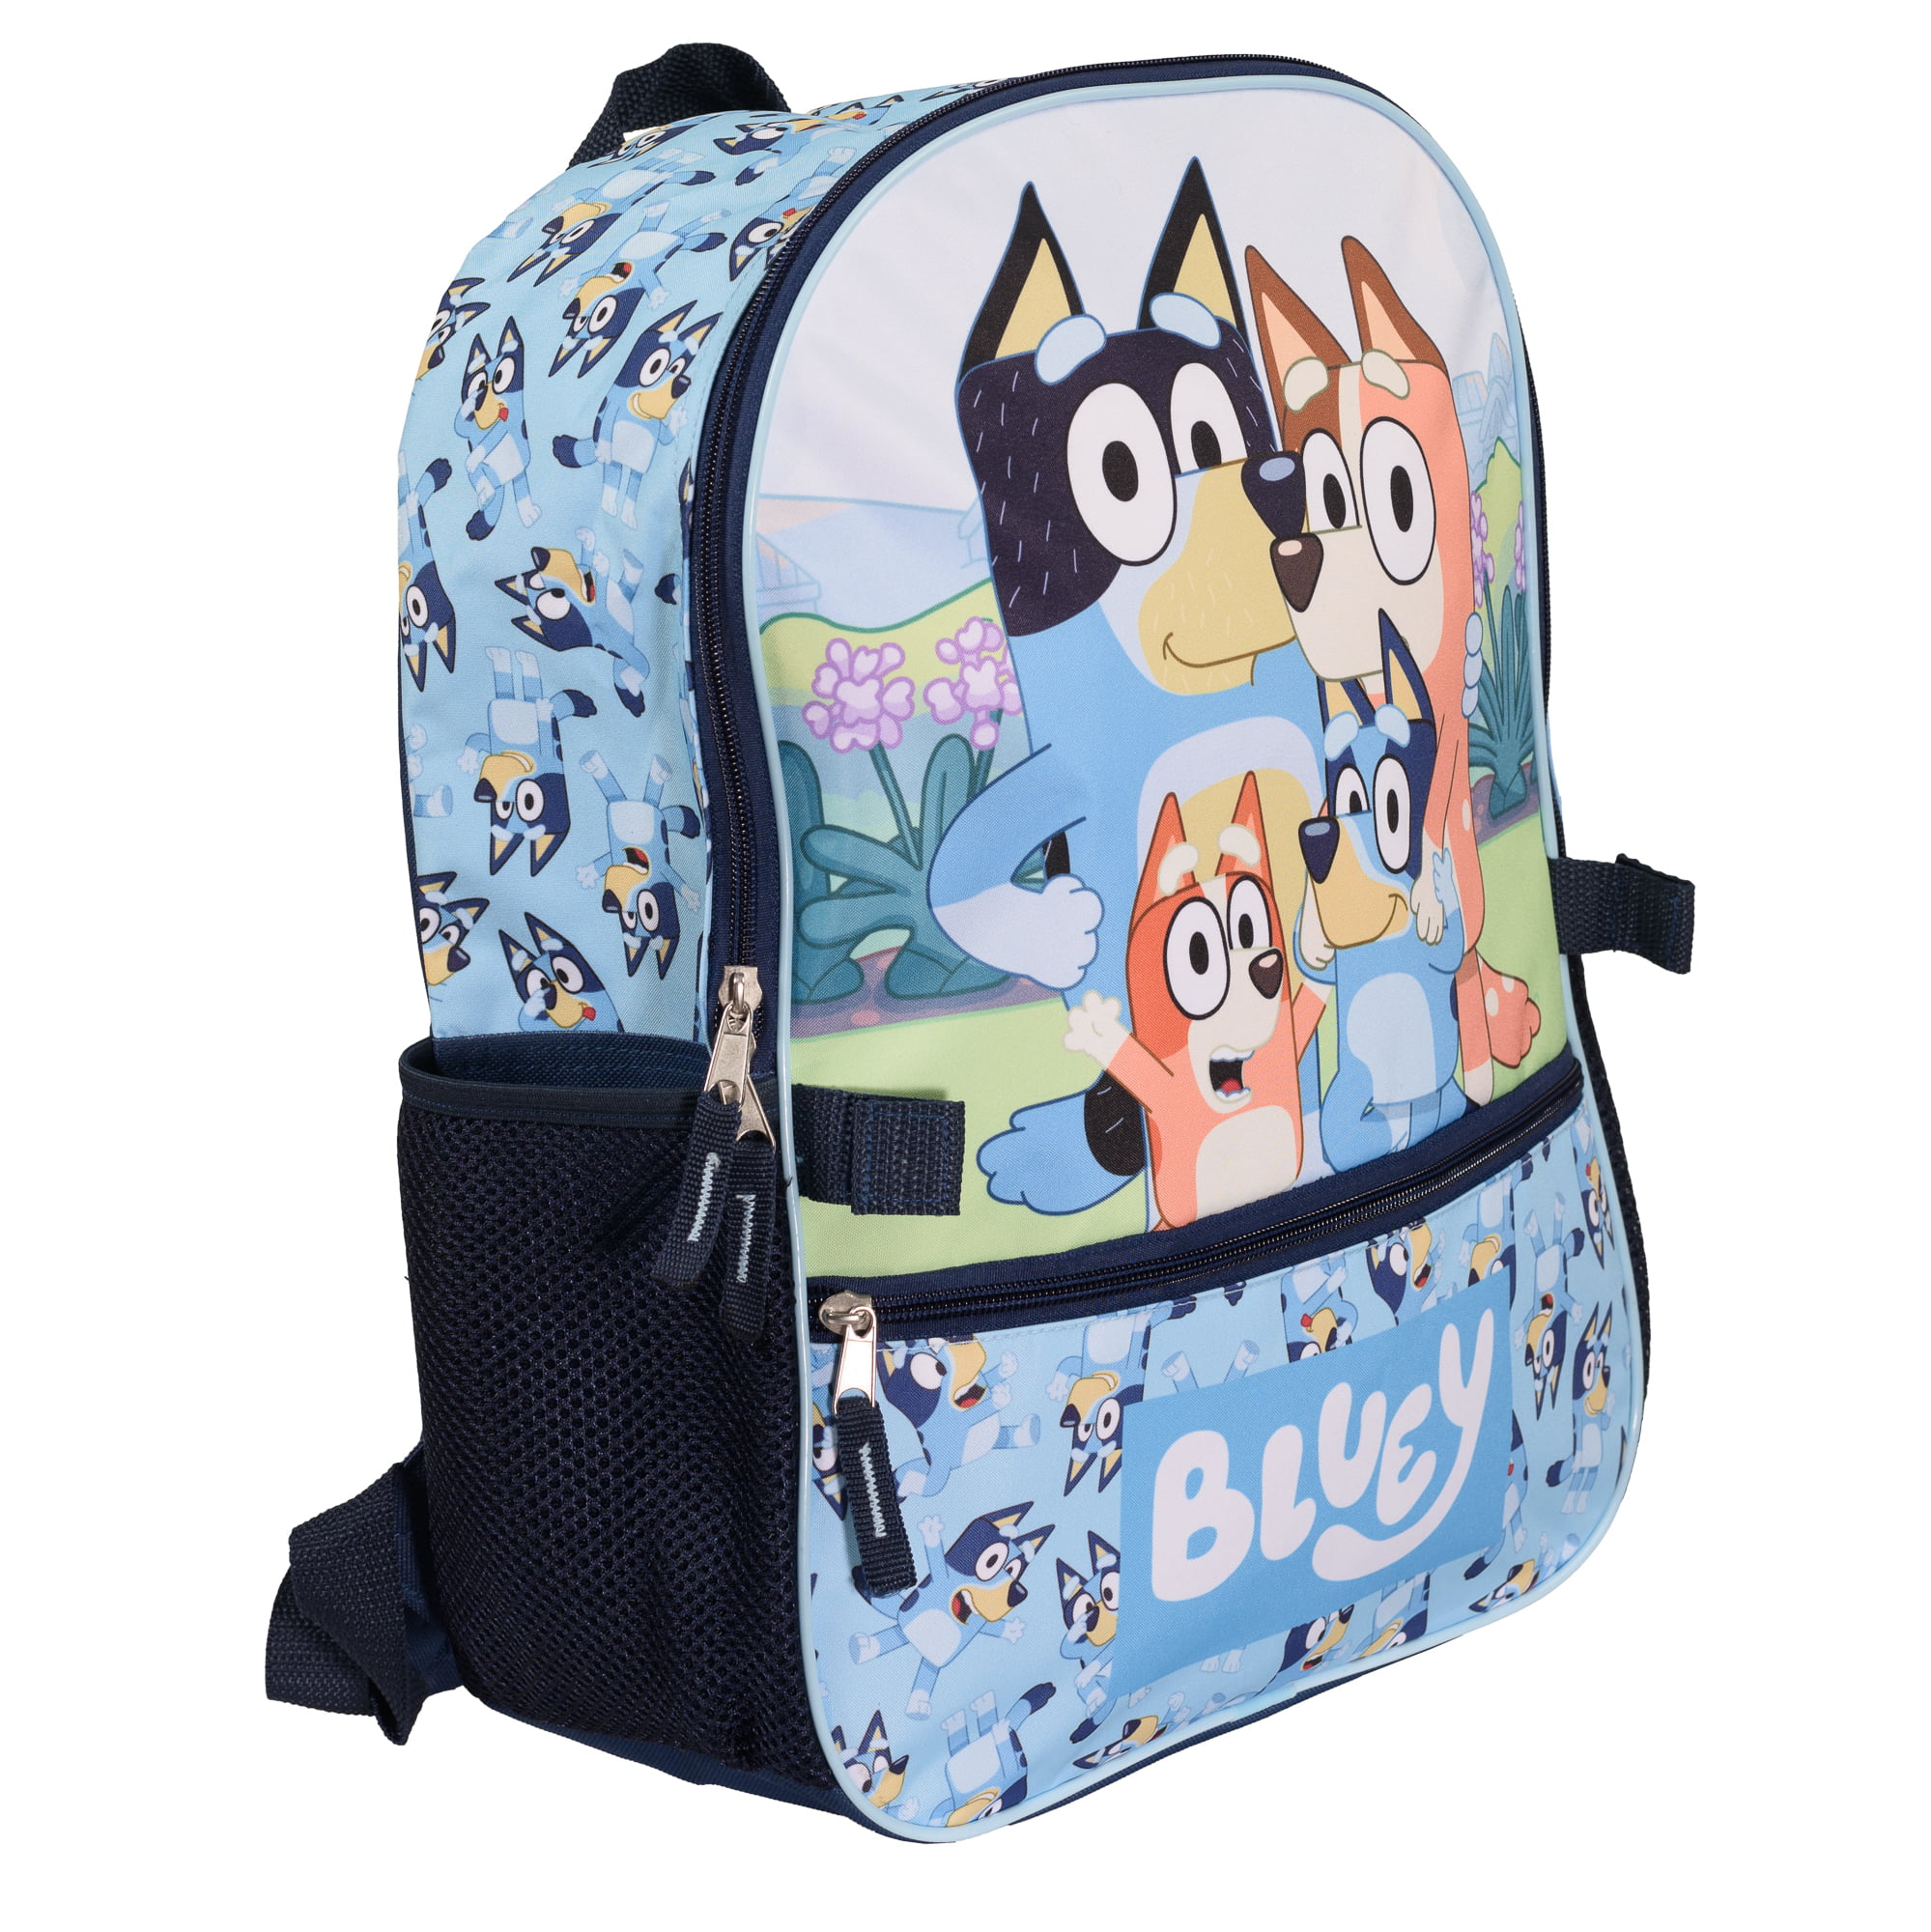 Bluey Kids 16 Inch School Backpack (One Size, Blue)